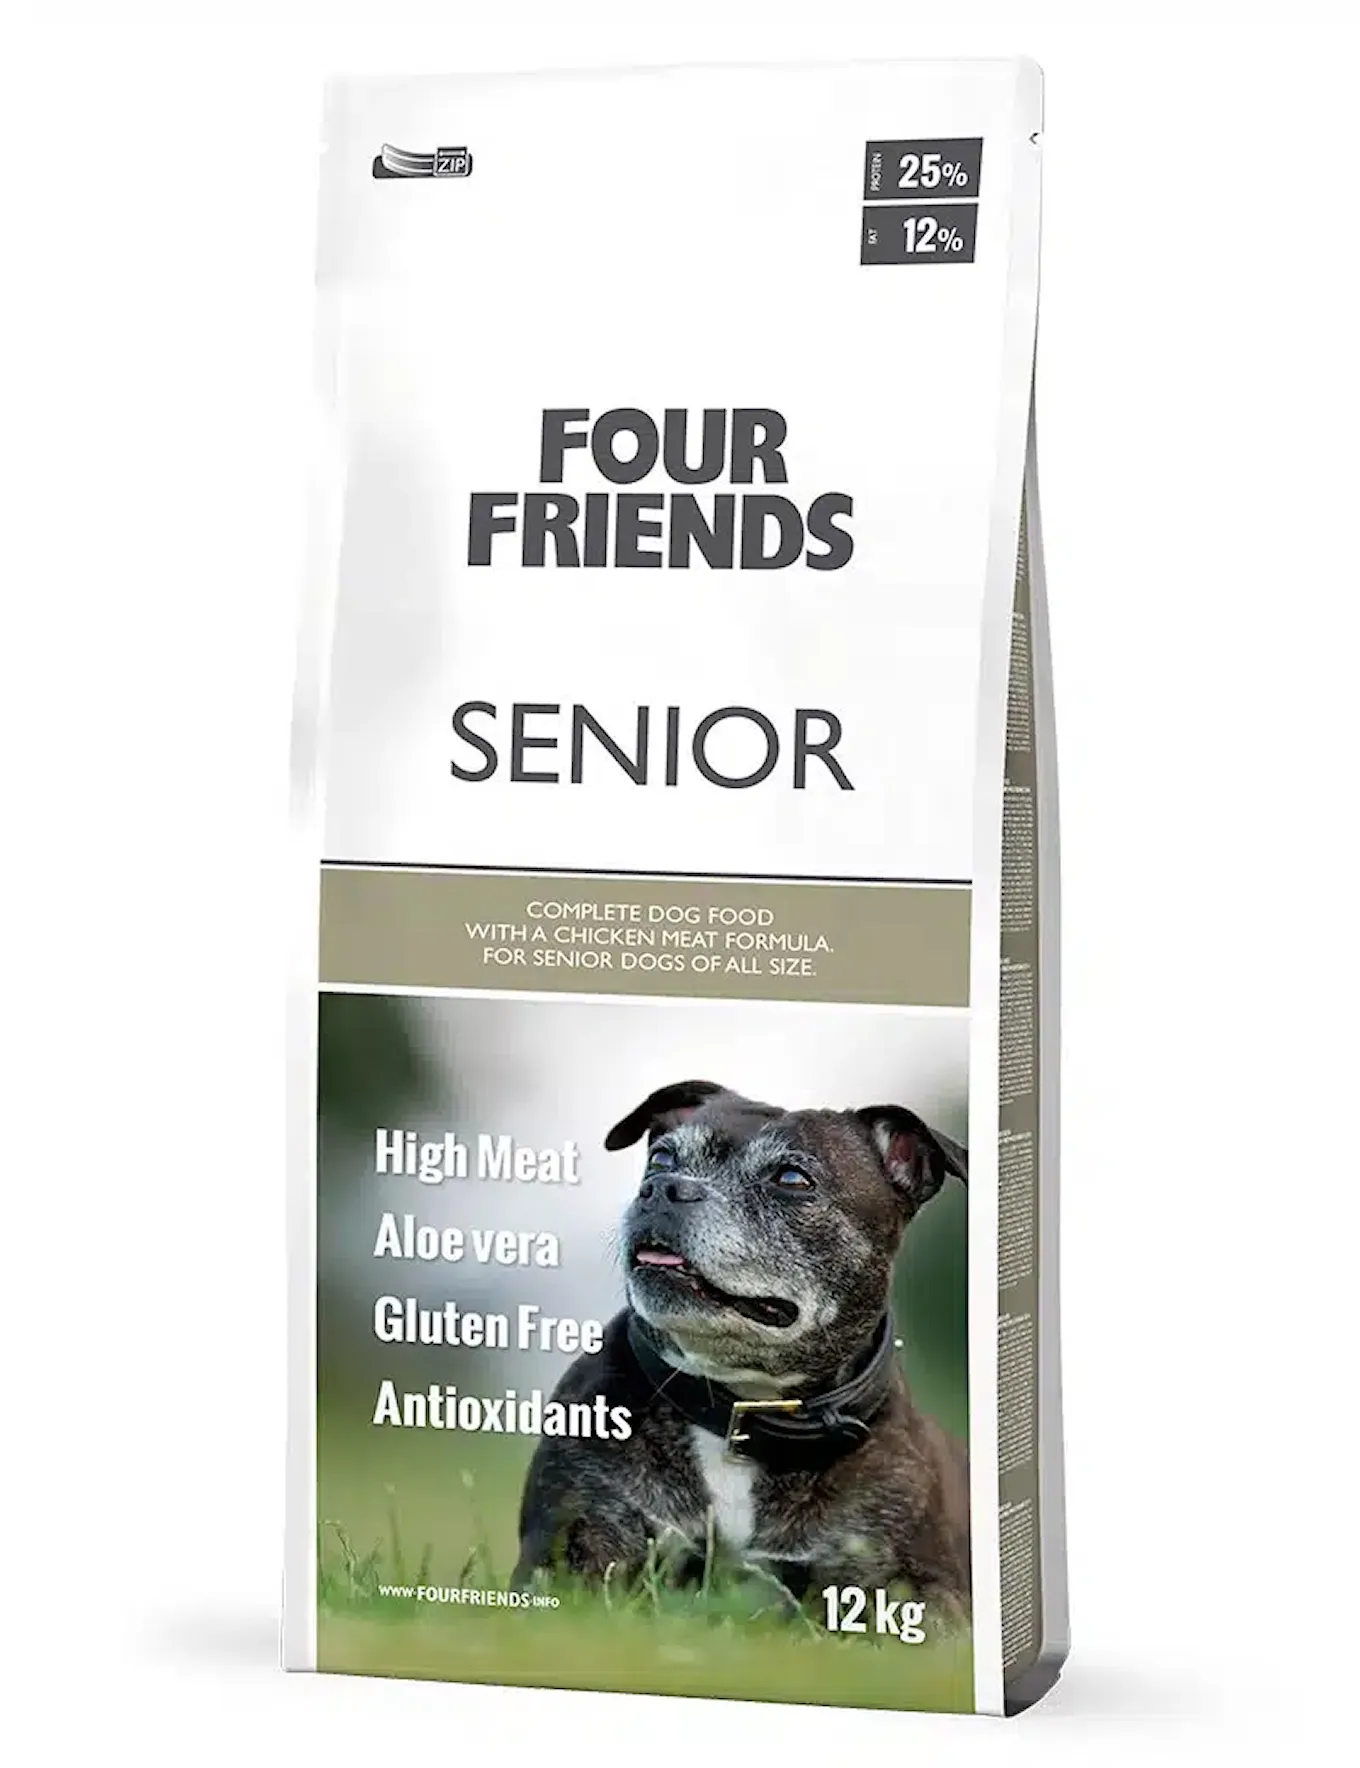 fourfriends_dogfood_drykibbles_senior_newlook_001.